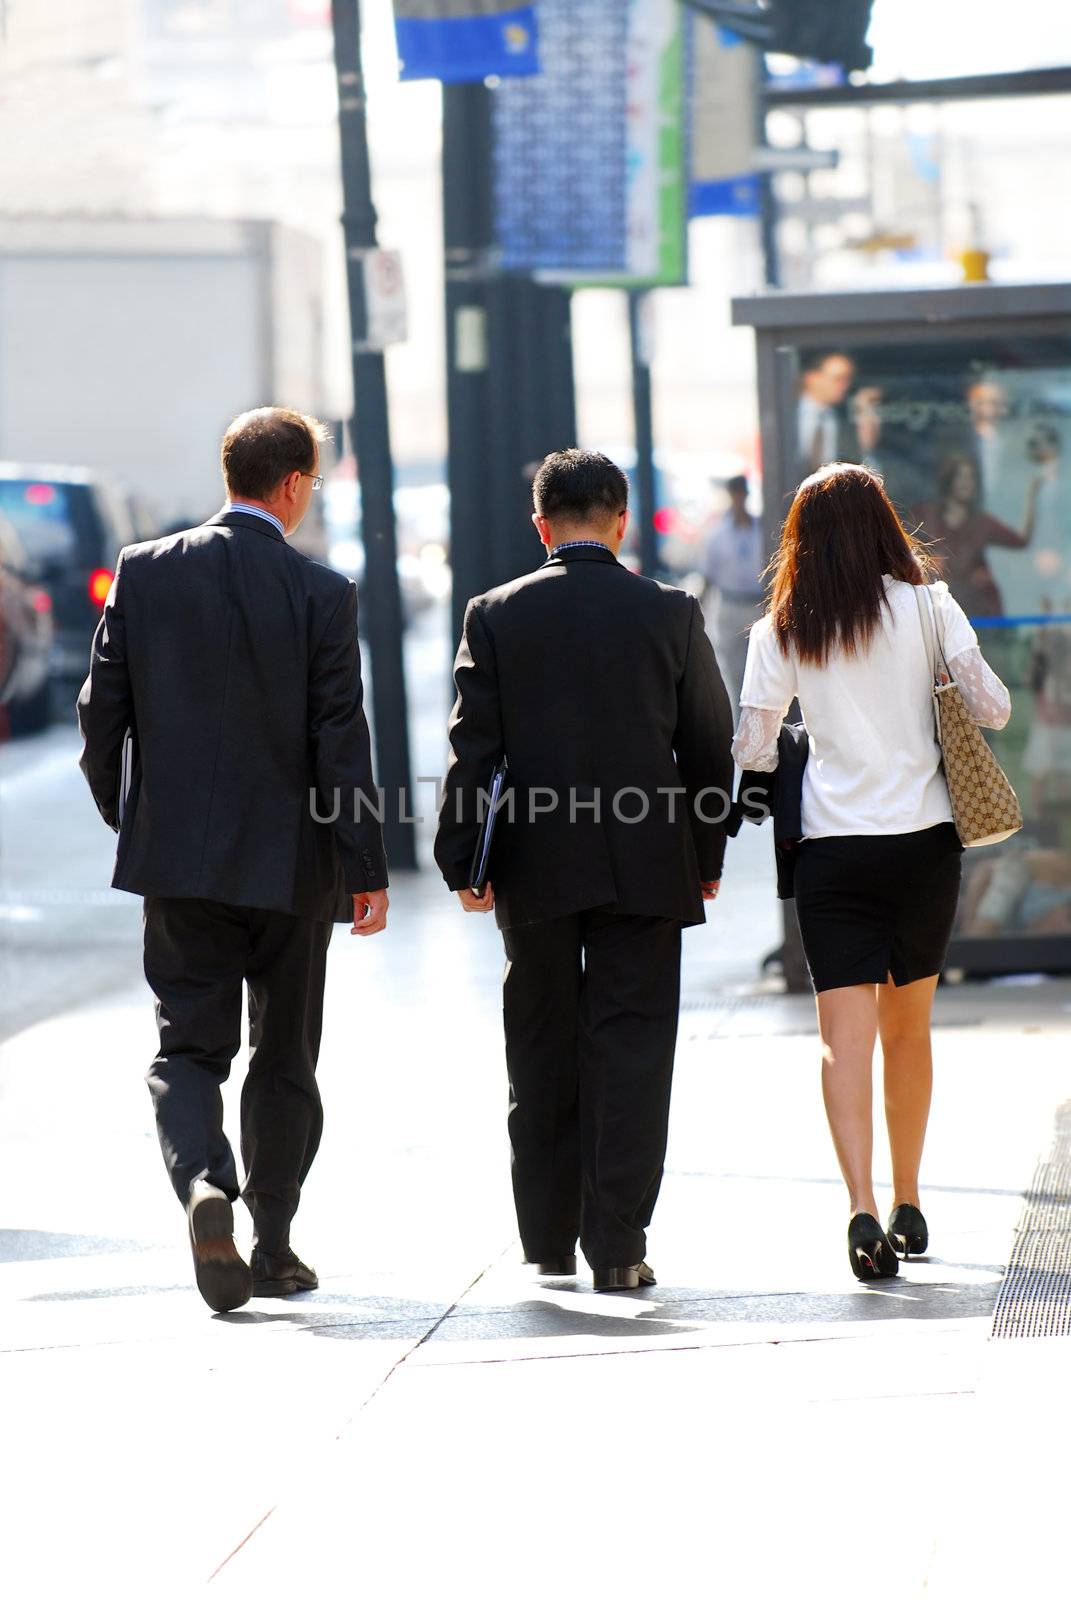 Business team walking on a sidewalk in busy city center